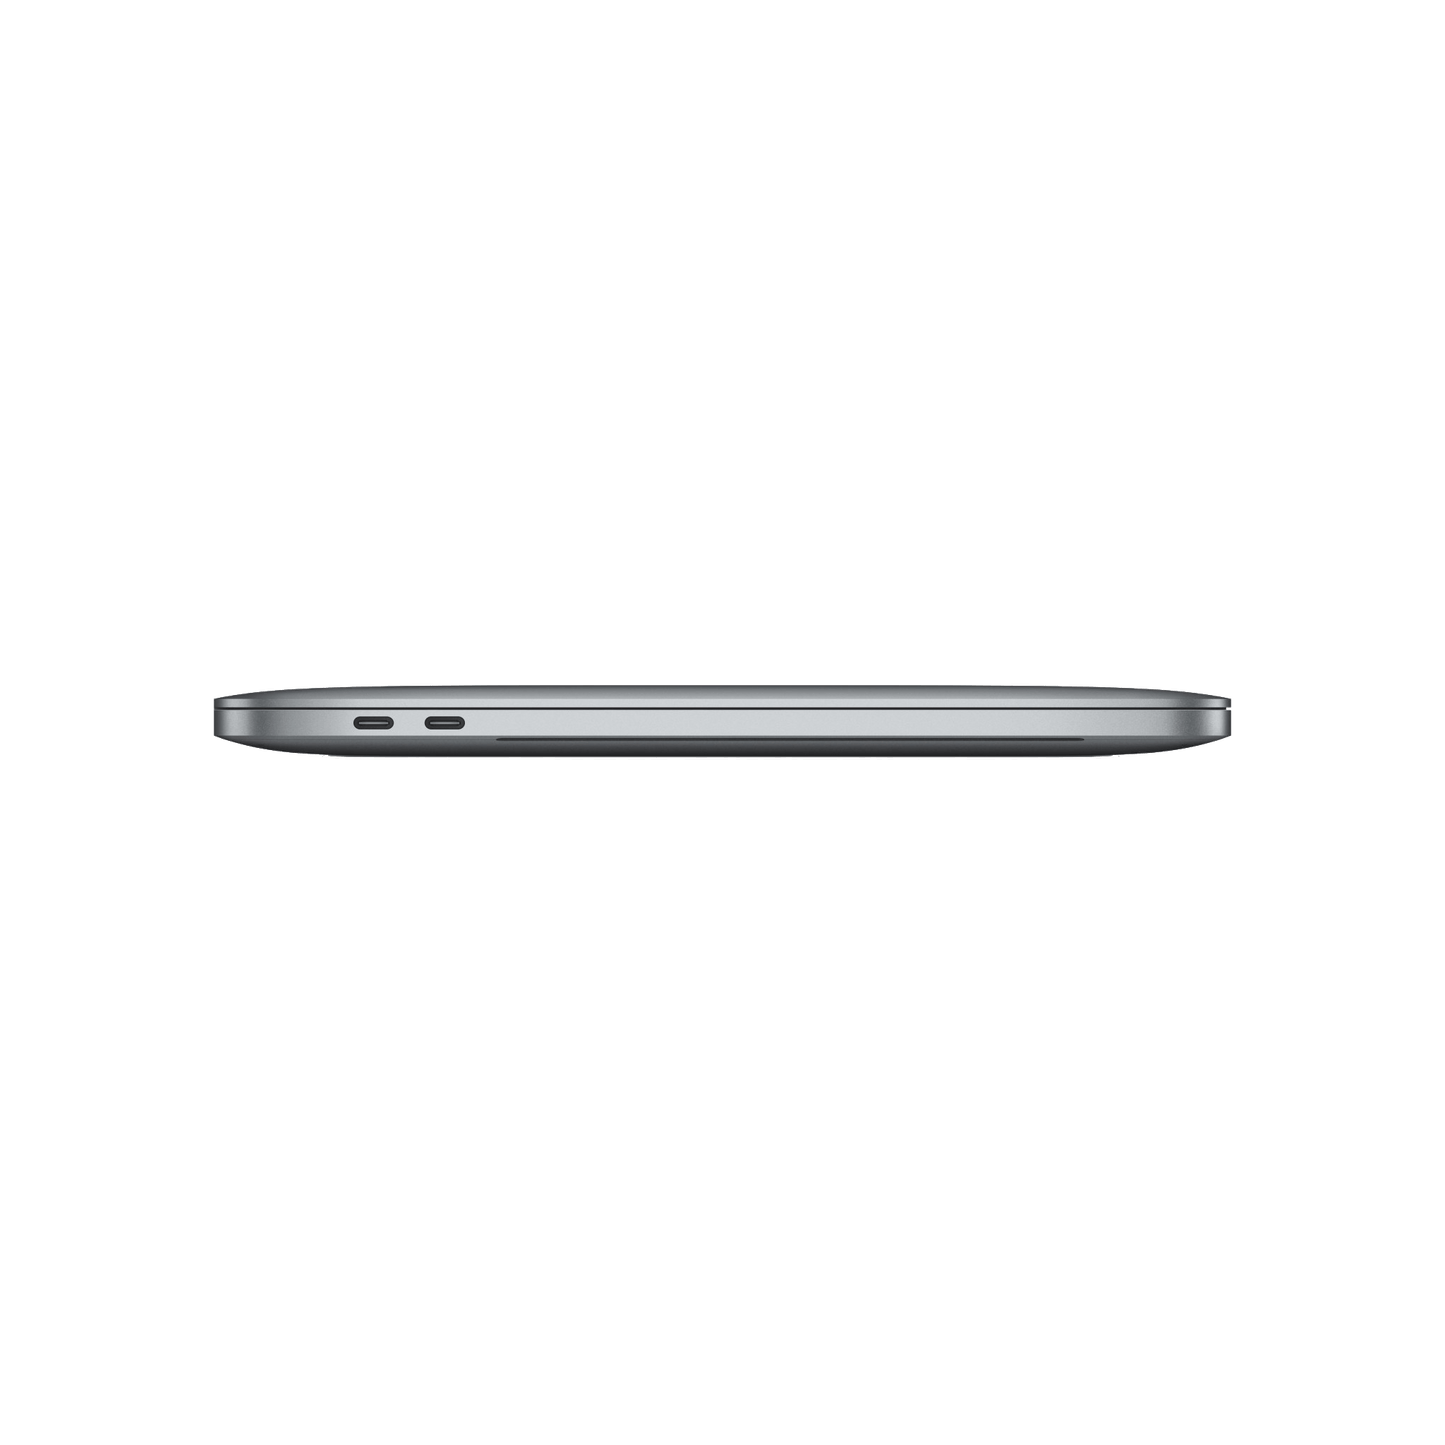 Refurbished MacBook Pro Touchbar 13" i5 2.3 8gb 256gb